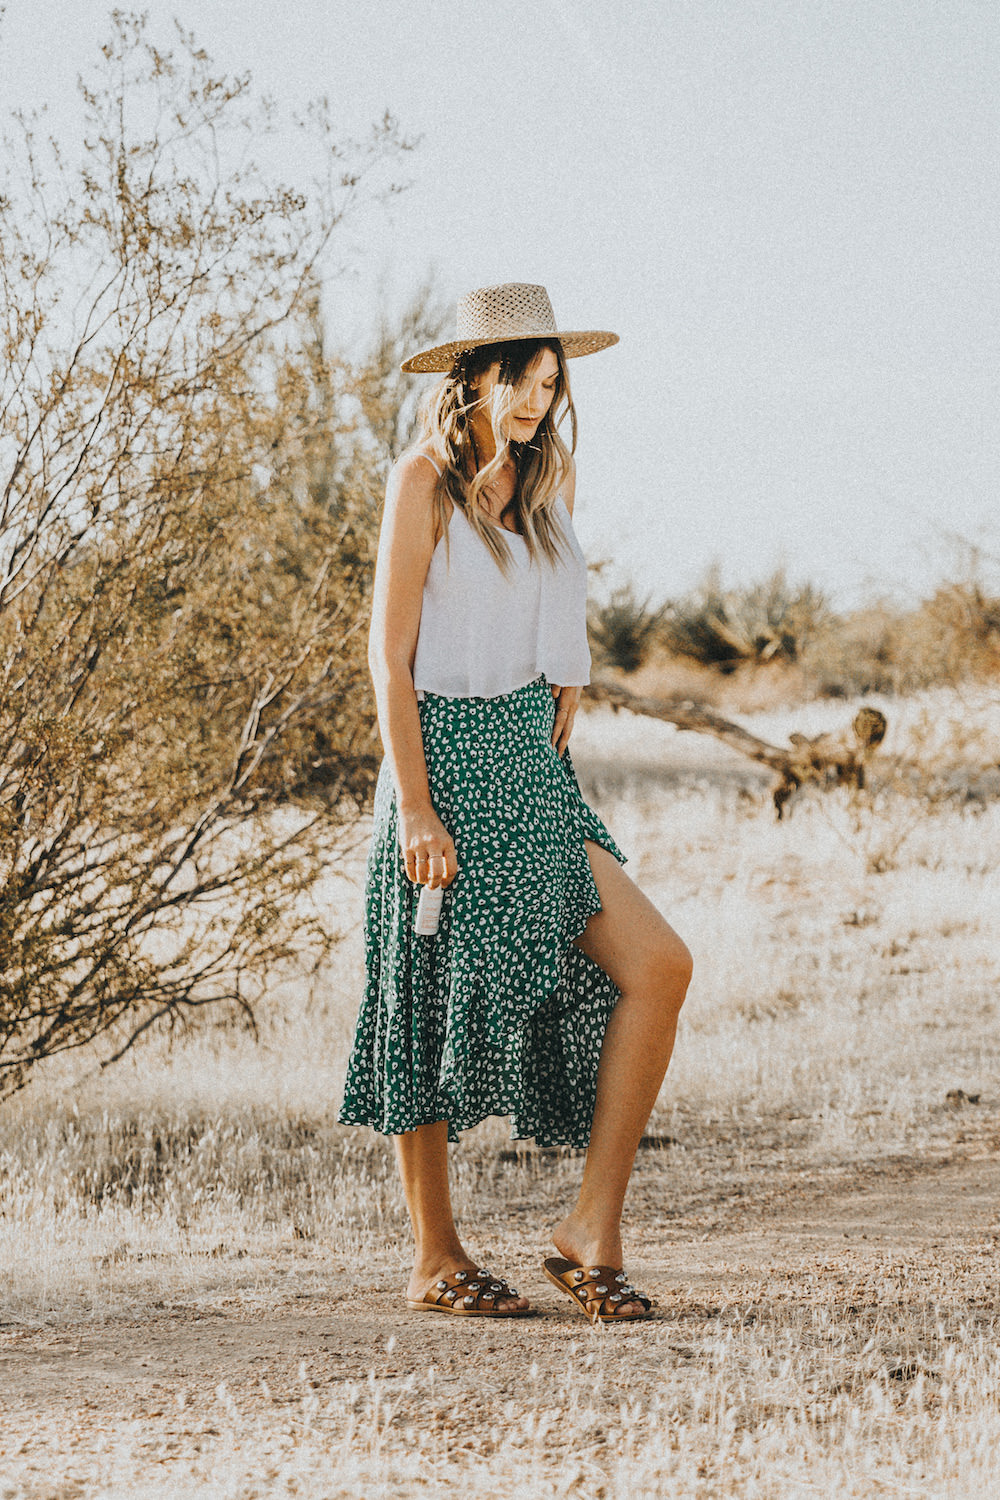 Dash of Darling | Arizona fashion and beauty blog Dash of Darling sharing Clarins Sunscreen